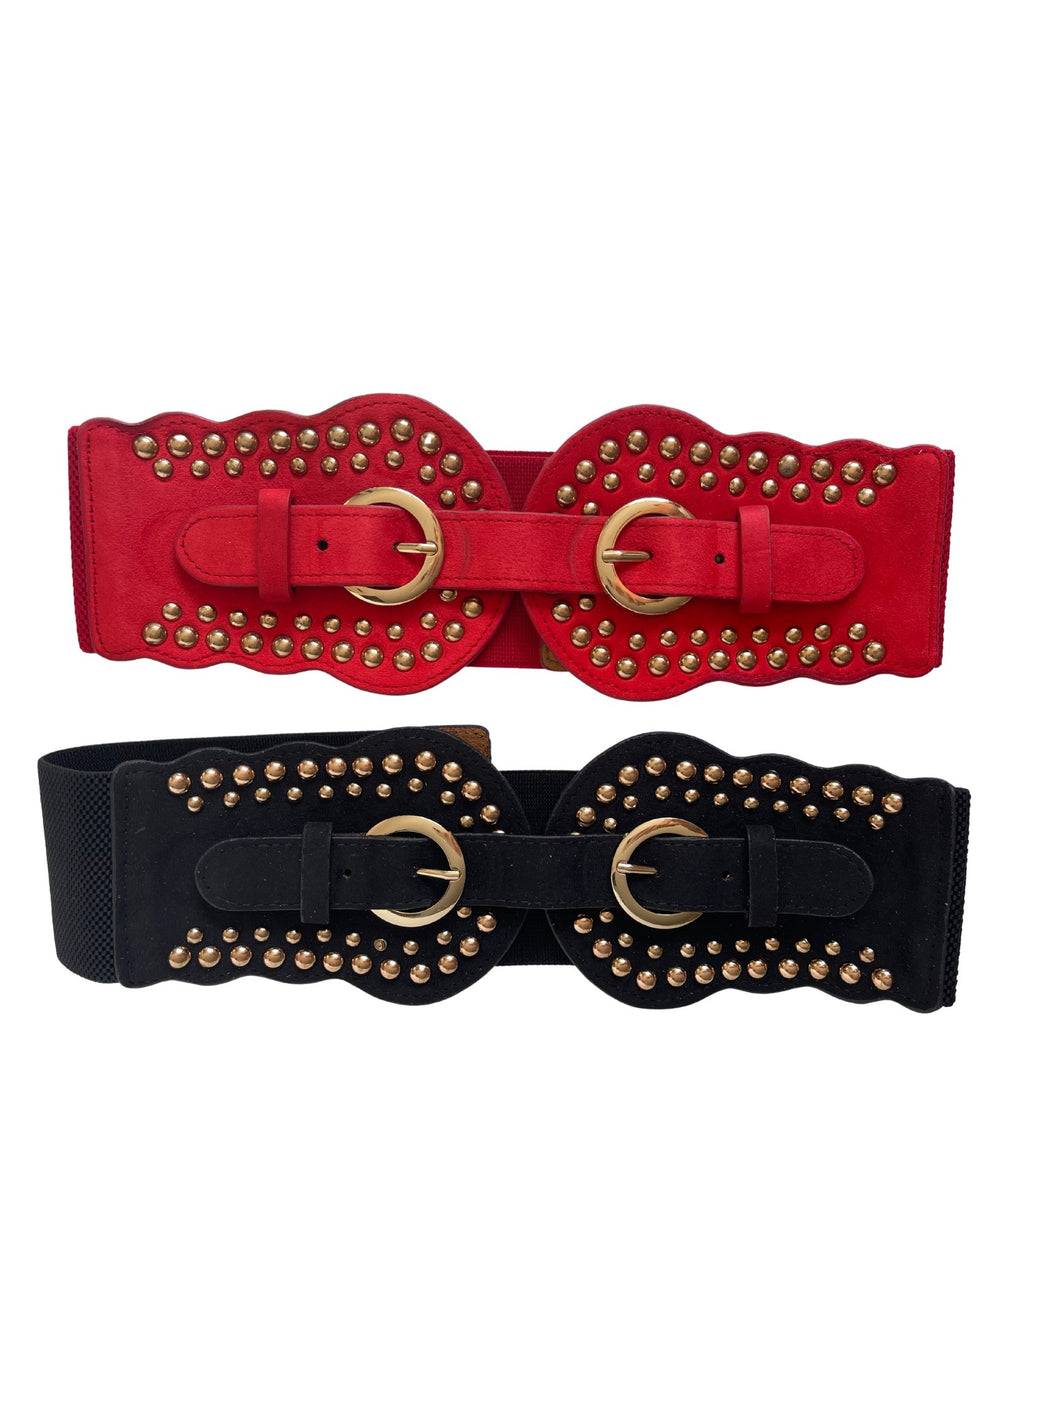 Elastic Nylon Wide Belt for Dress Metal Buckle Women Belts Black Red Ladies Dresses Waist Belt